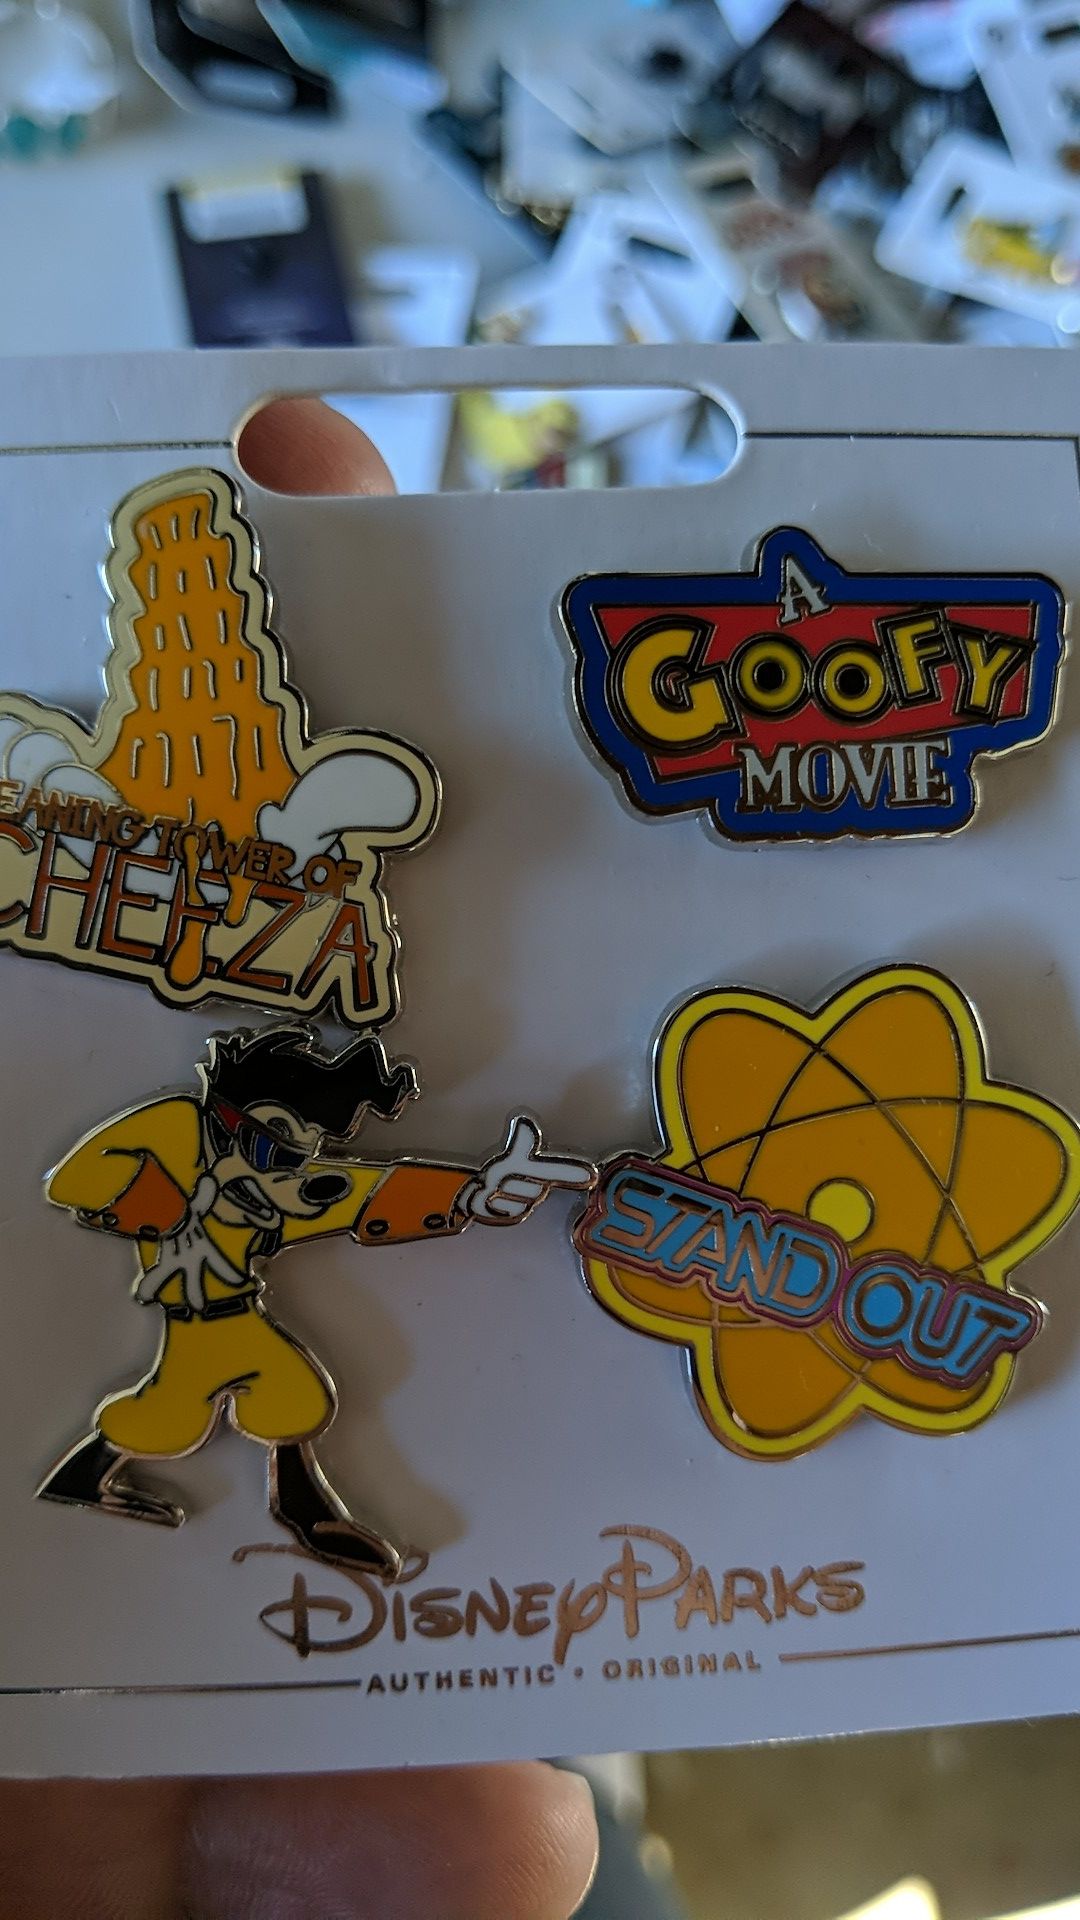 Disney goofy collectible pins set new 10$